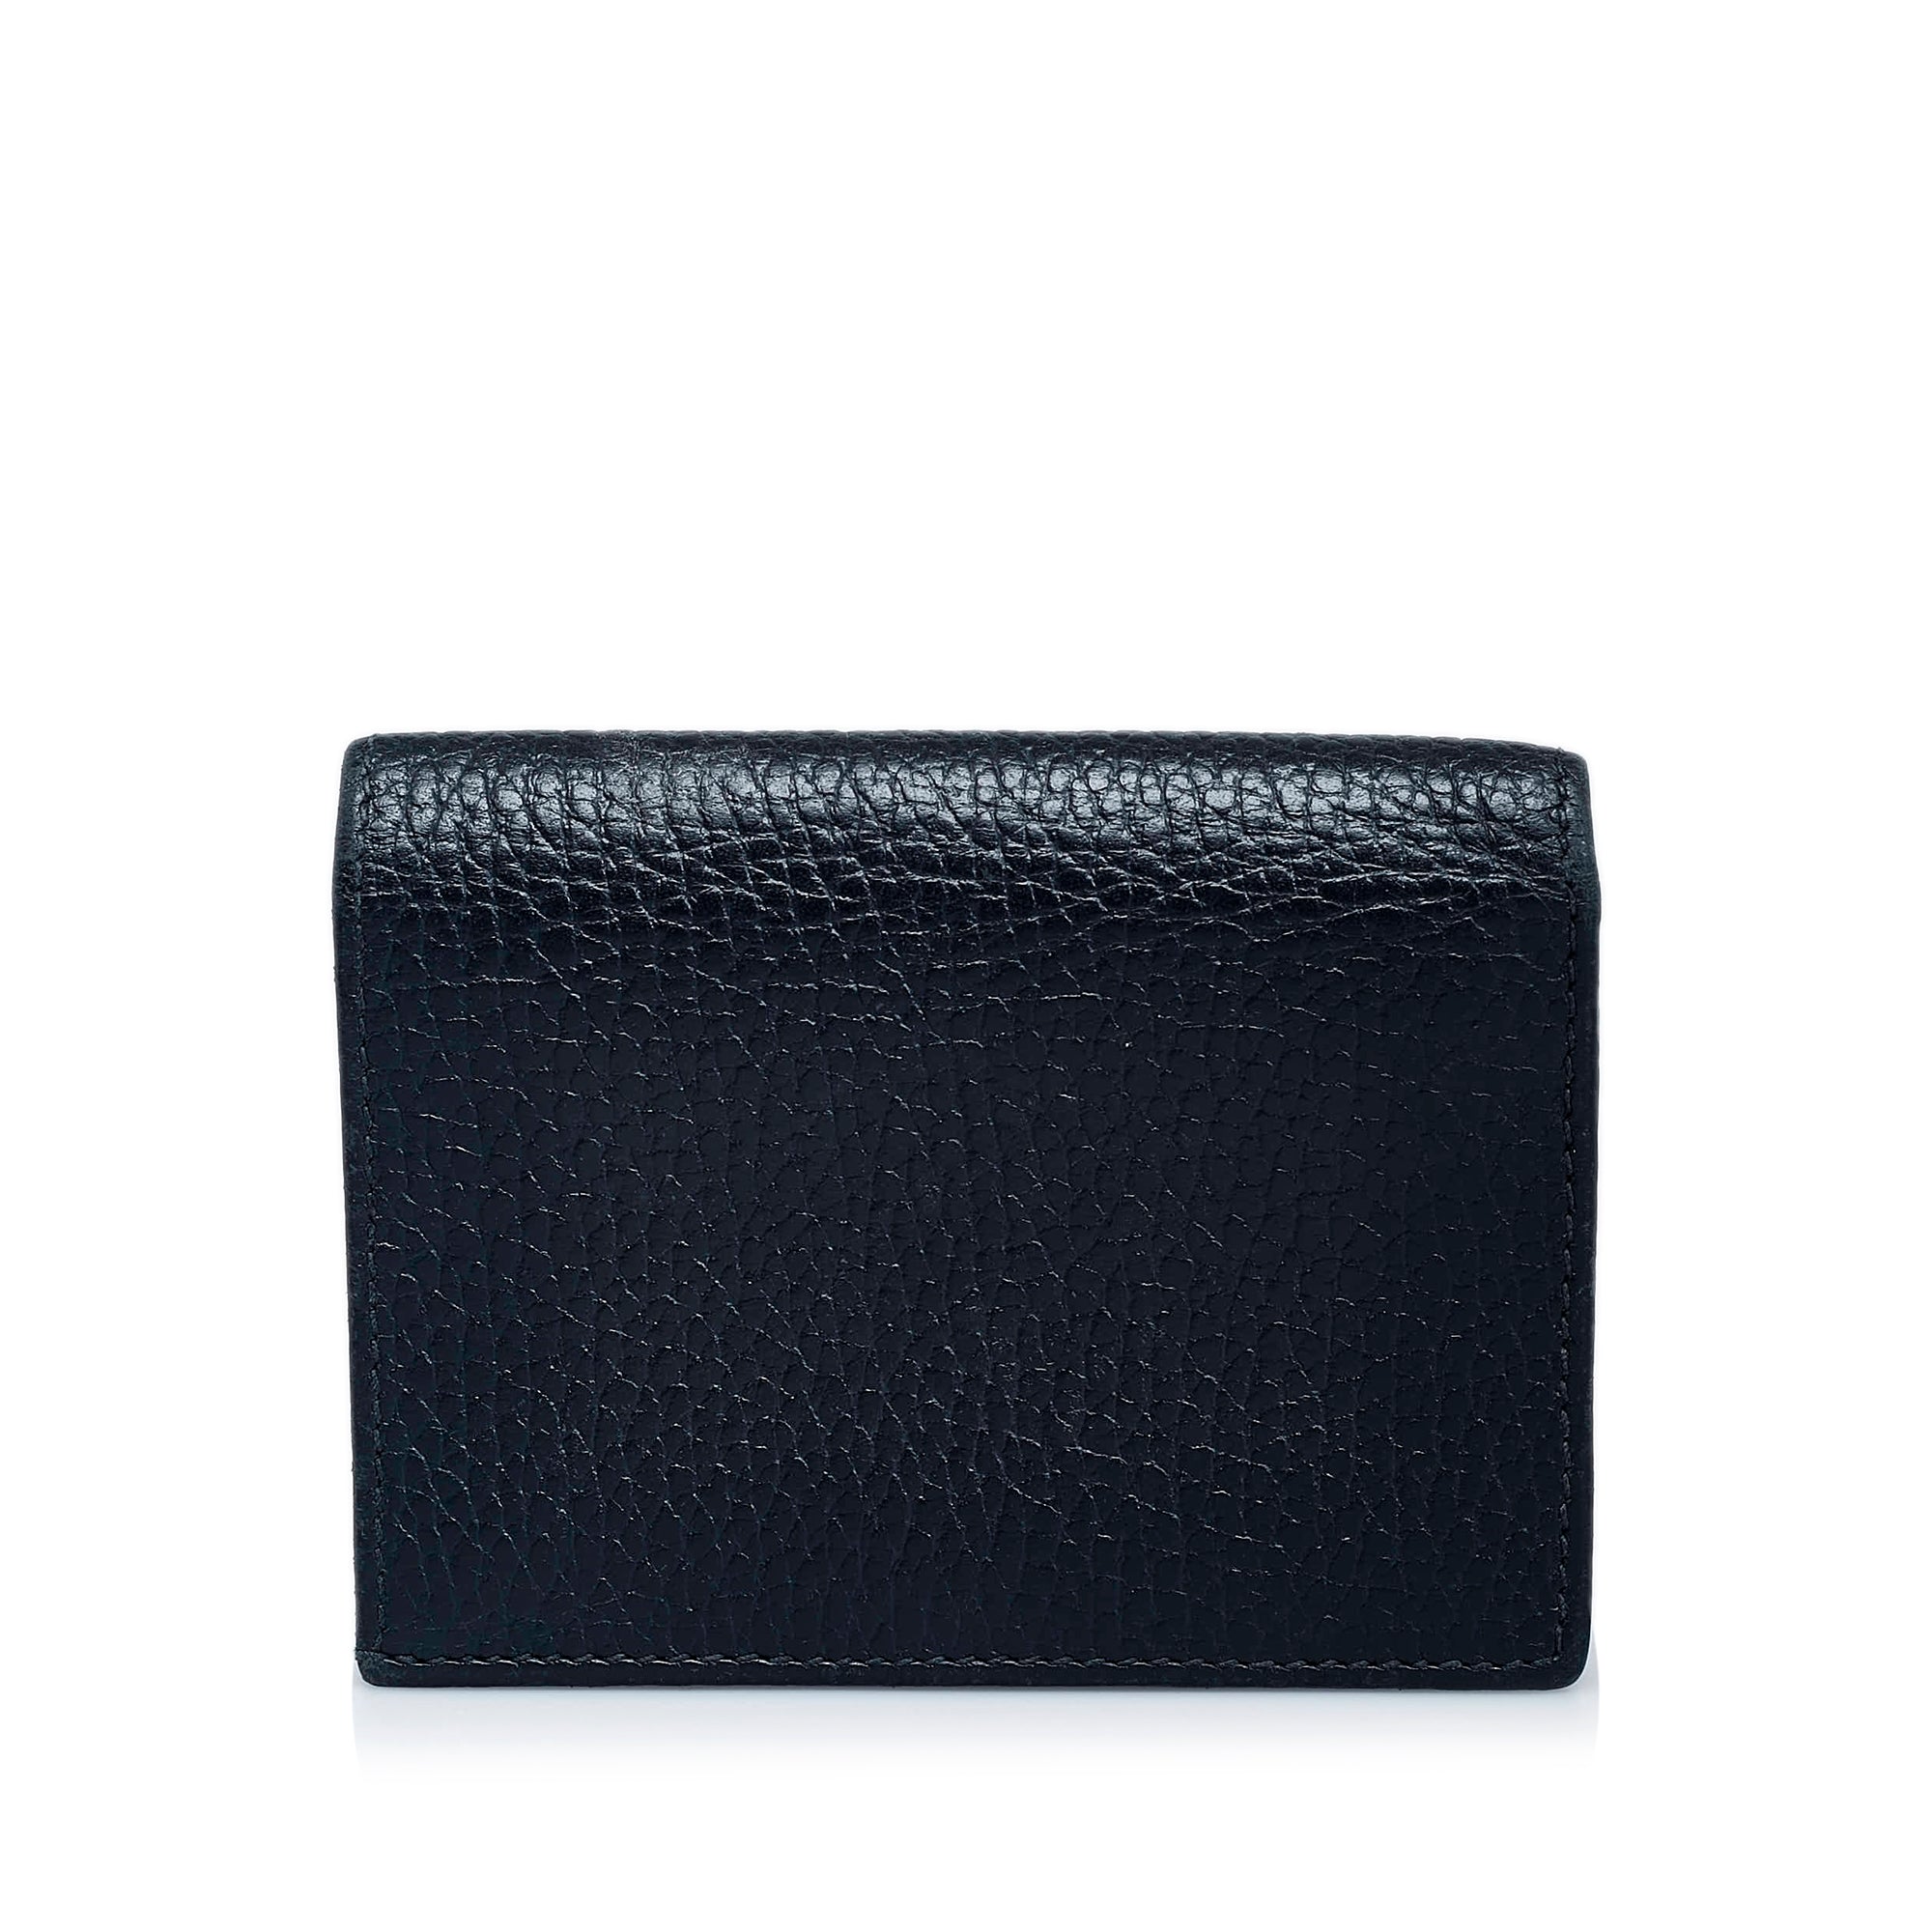 Gucci Men's GG Marmont Leather Cardholder - Black - Wallets